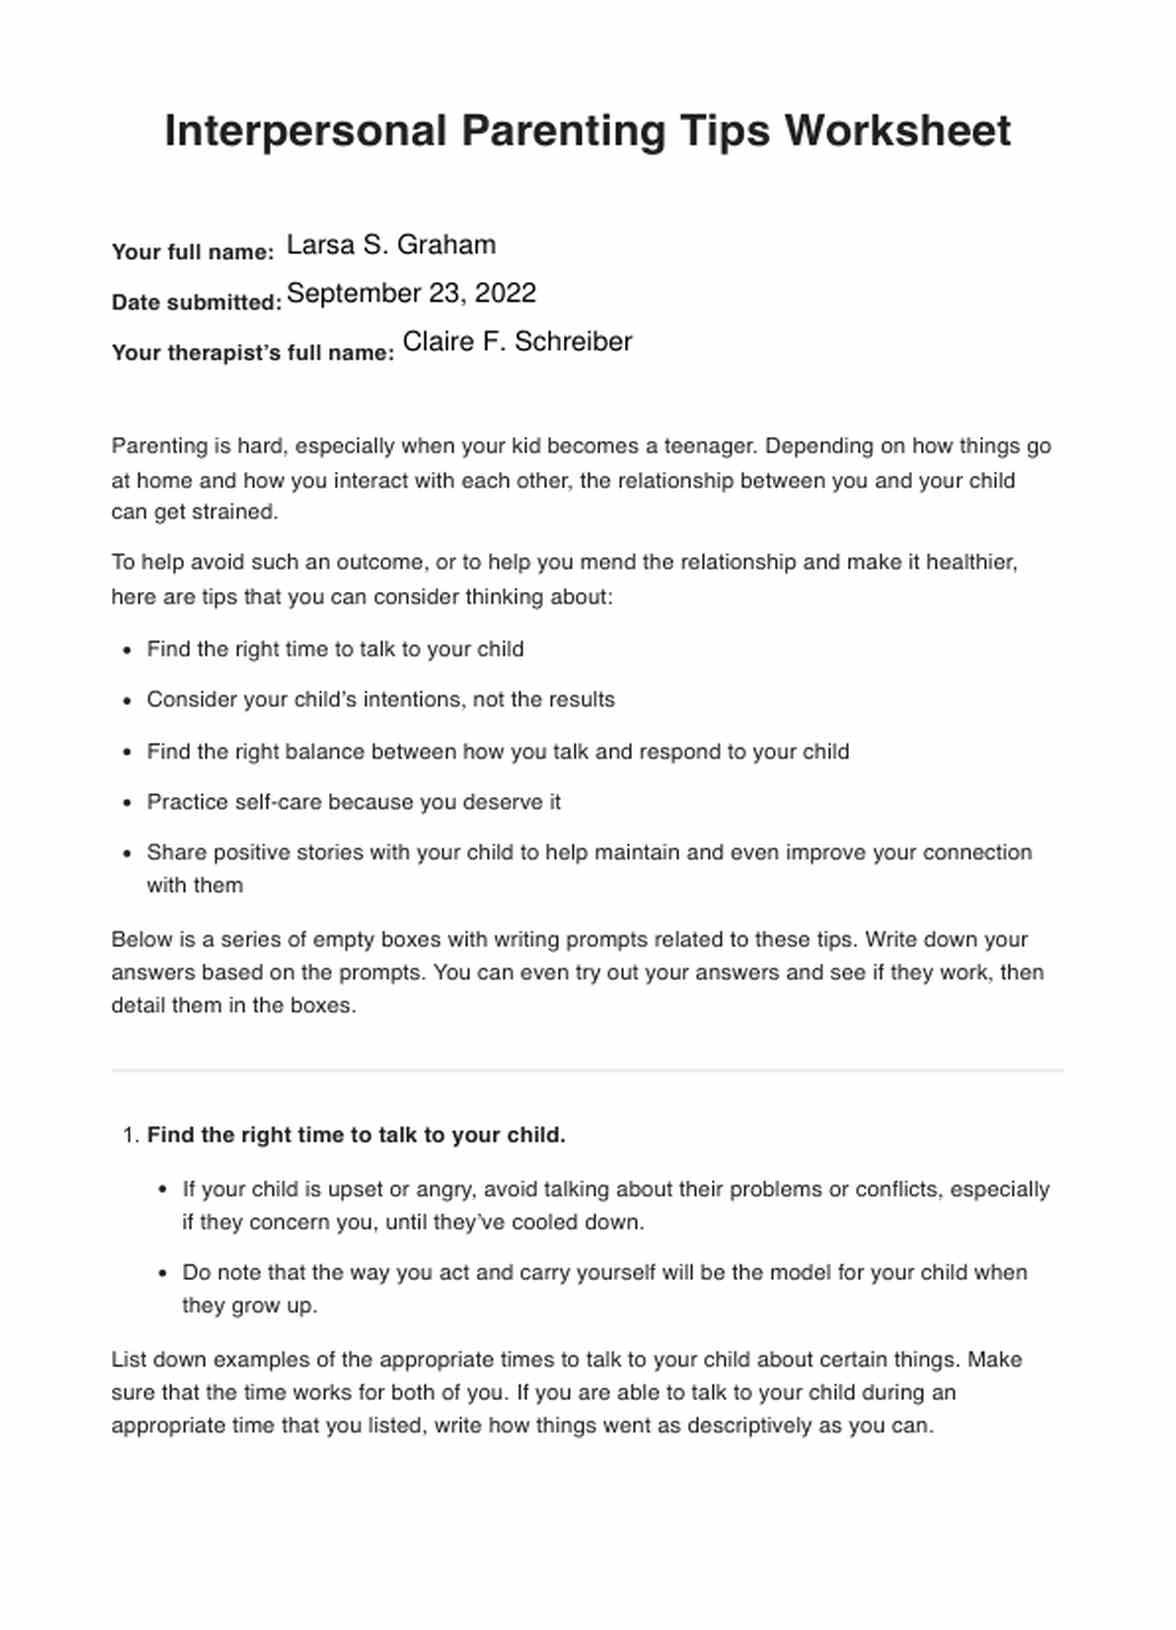 Interpersonal Parenting Tips Worksheet PDF Example